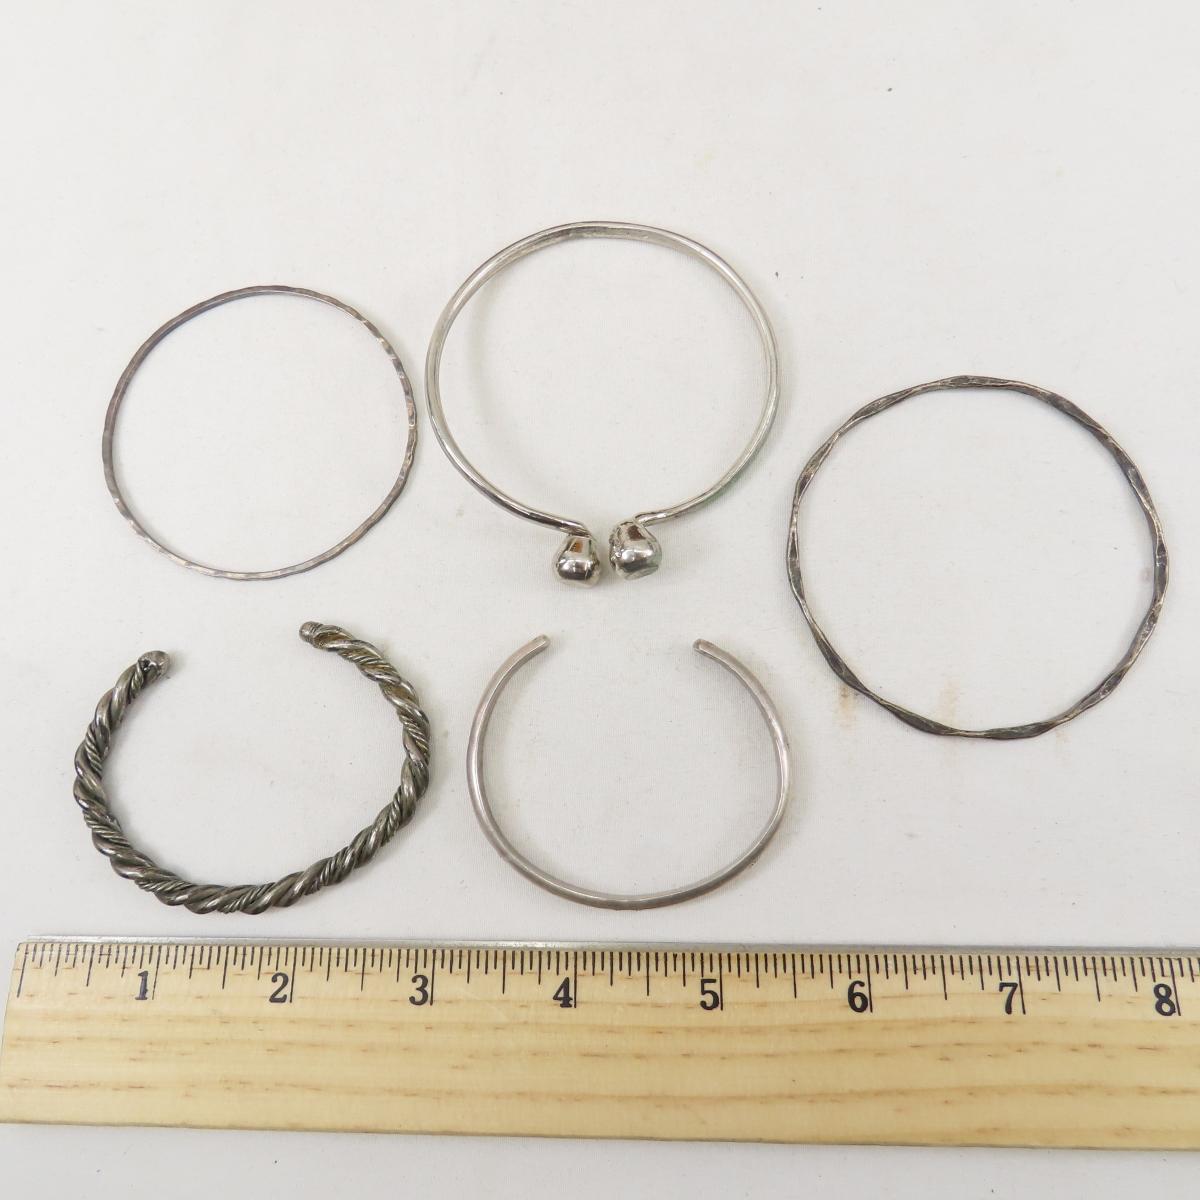 TAV Earrings, Sweden Pewter & other jewelry